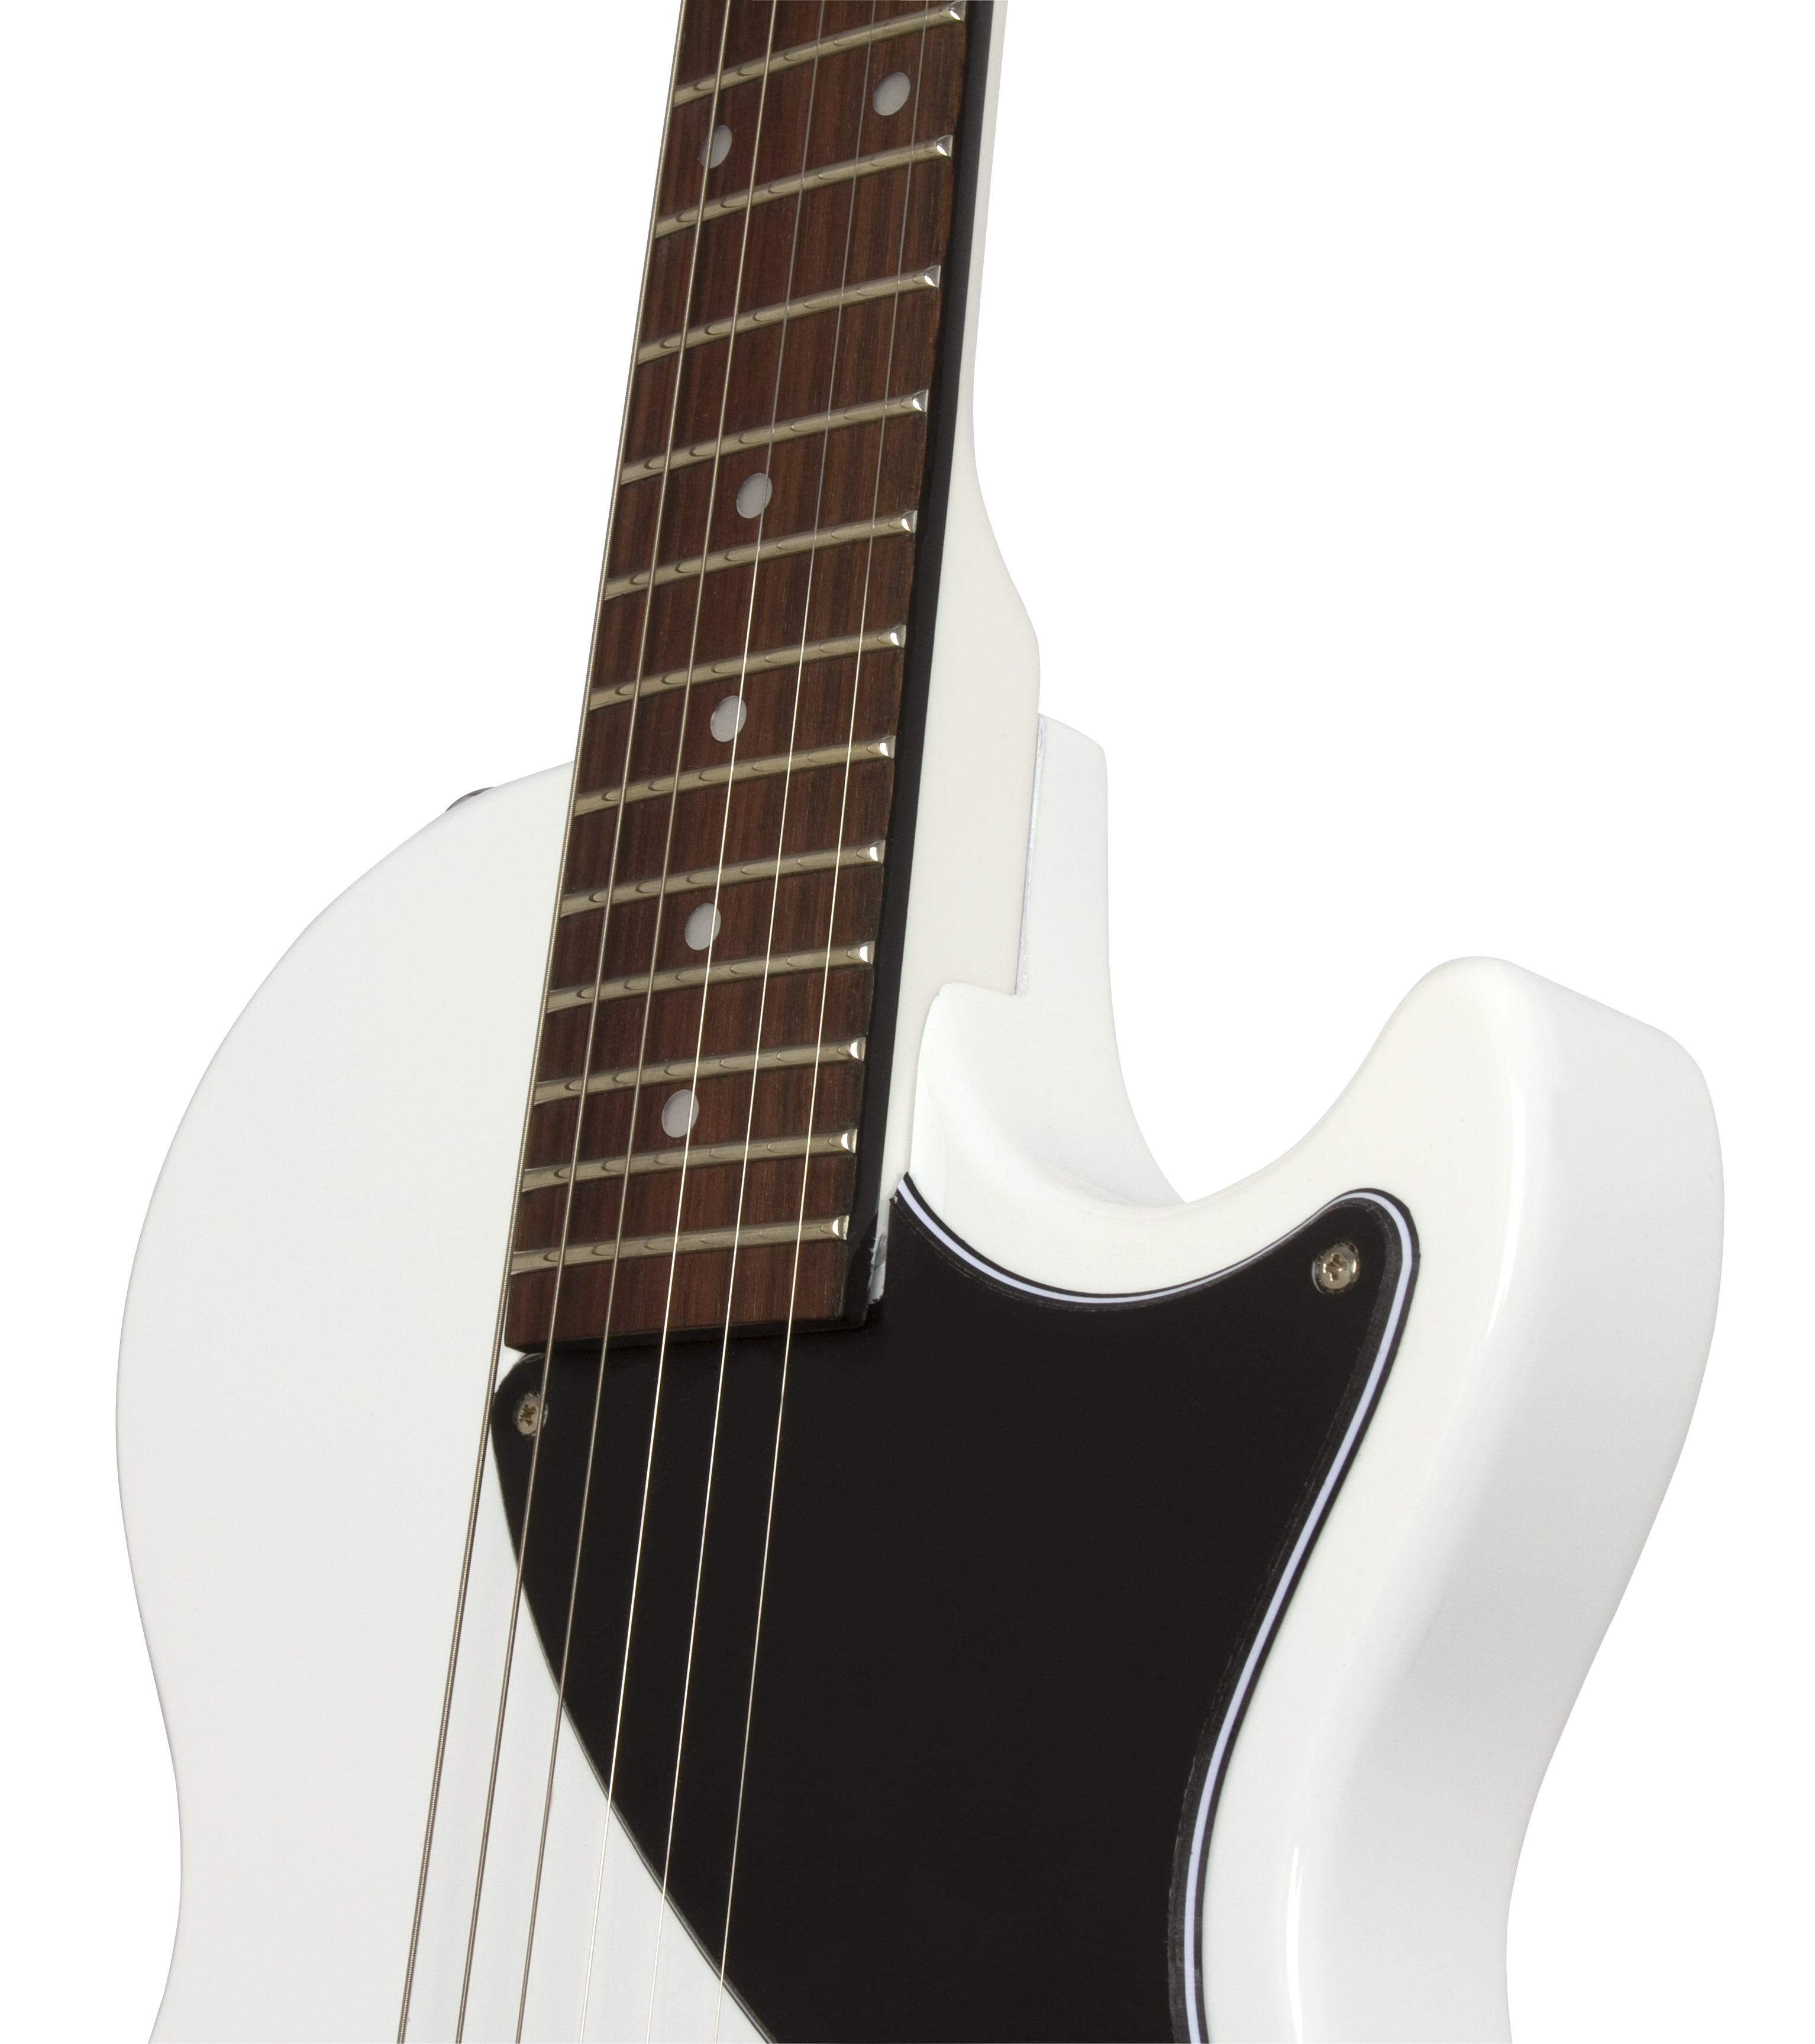 Rocksmith Guitar Bundle Epiphone Les Paul Junior Xbox 360 for